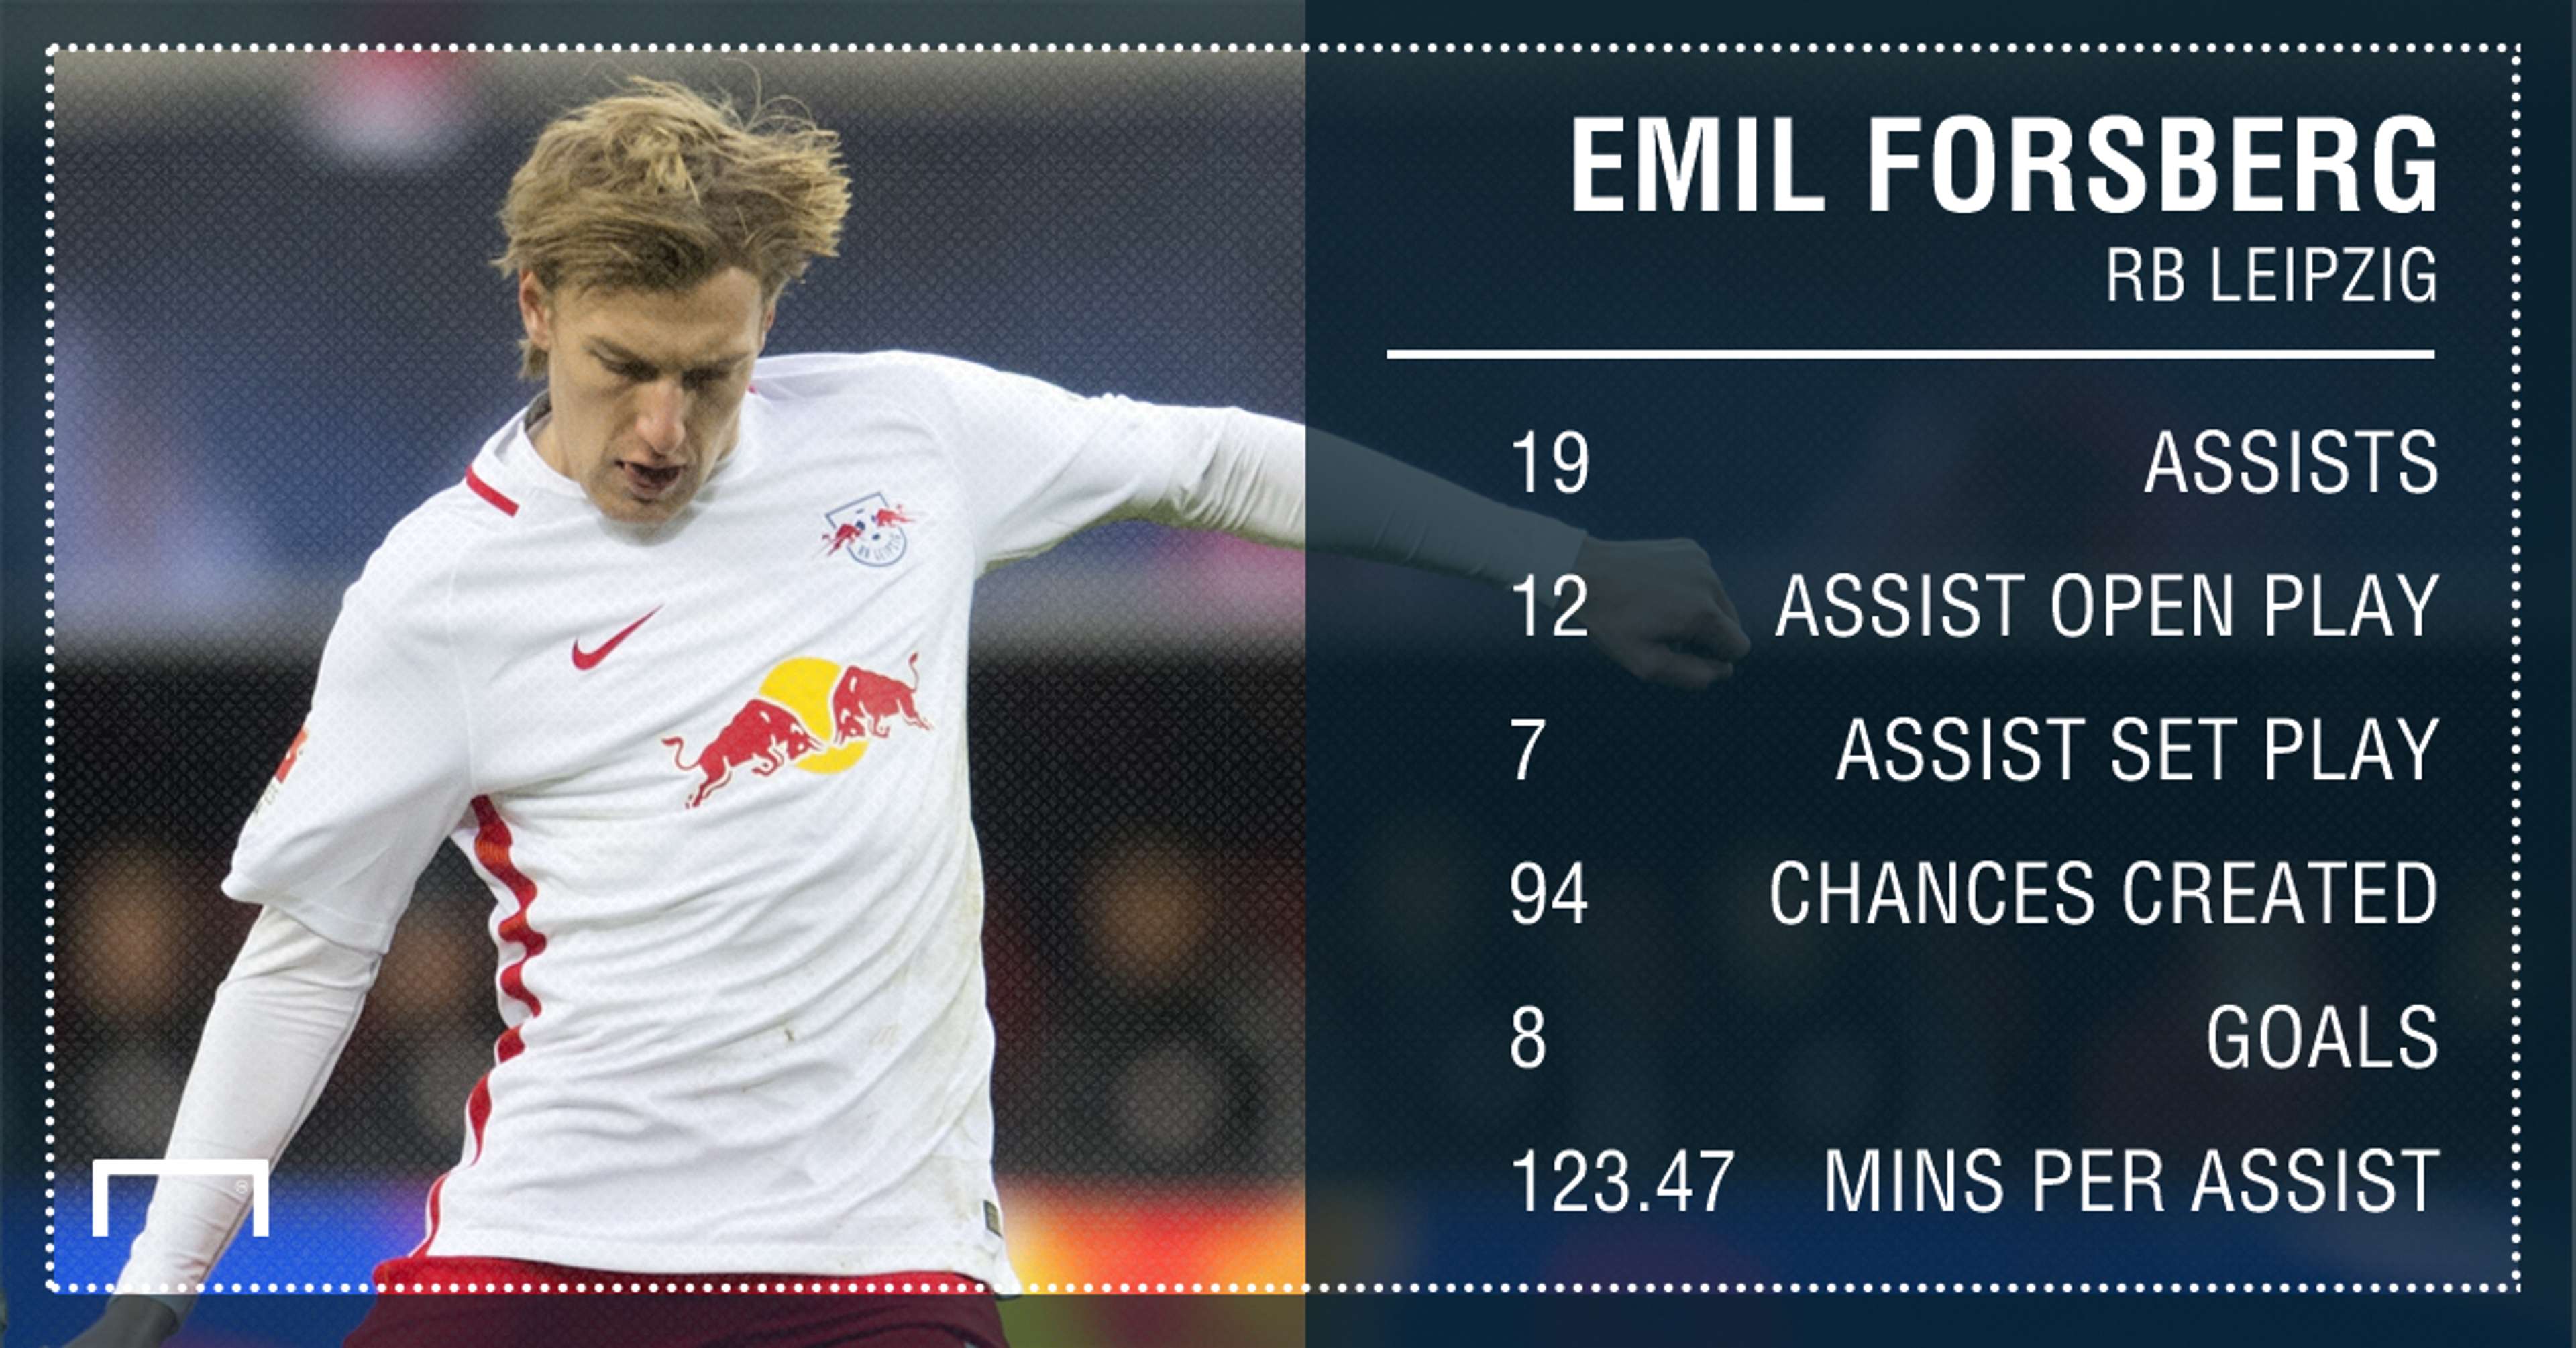 Emil Forsberg RB Leipzig assists 16 17